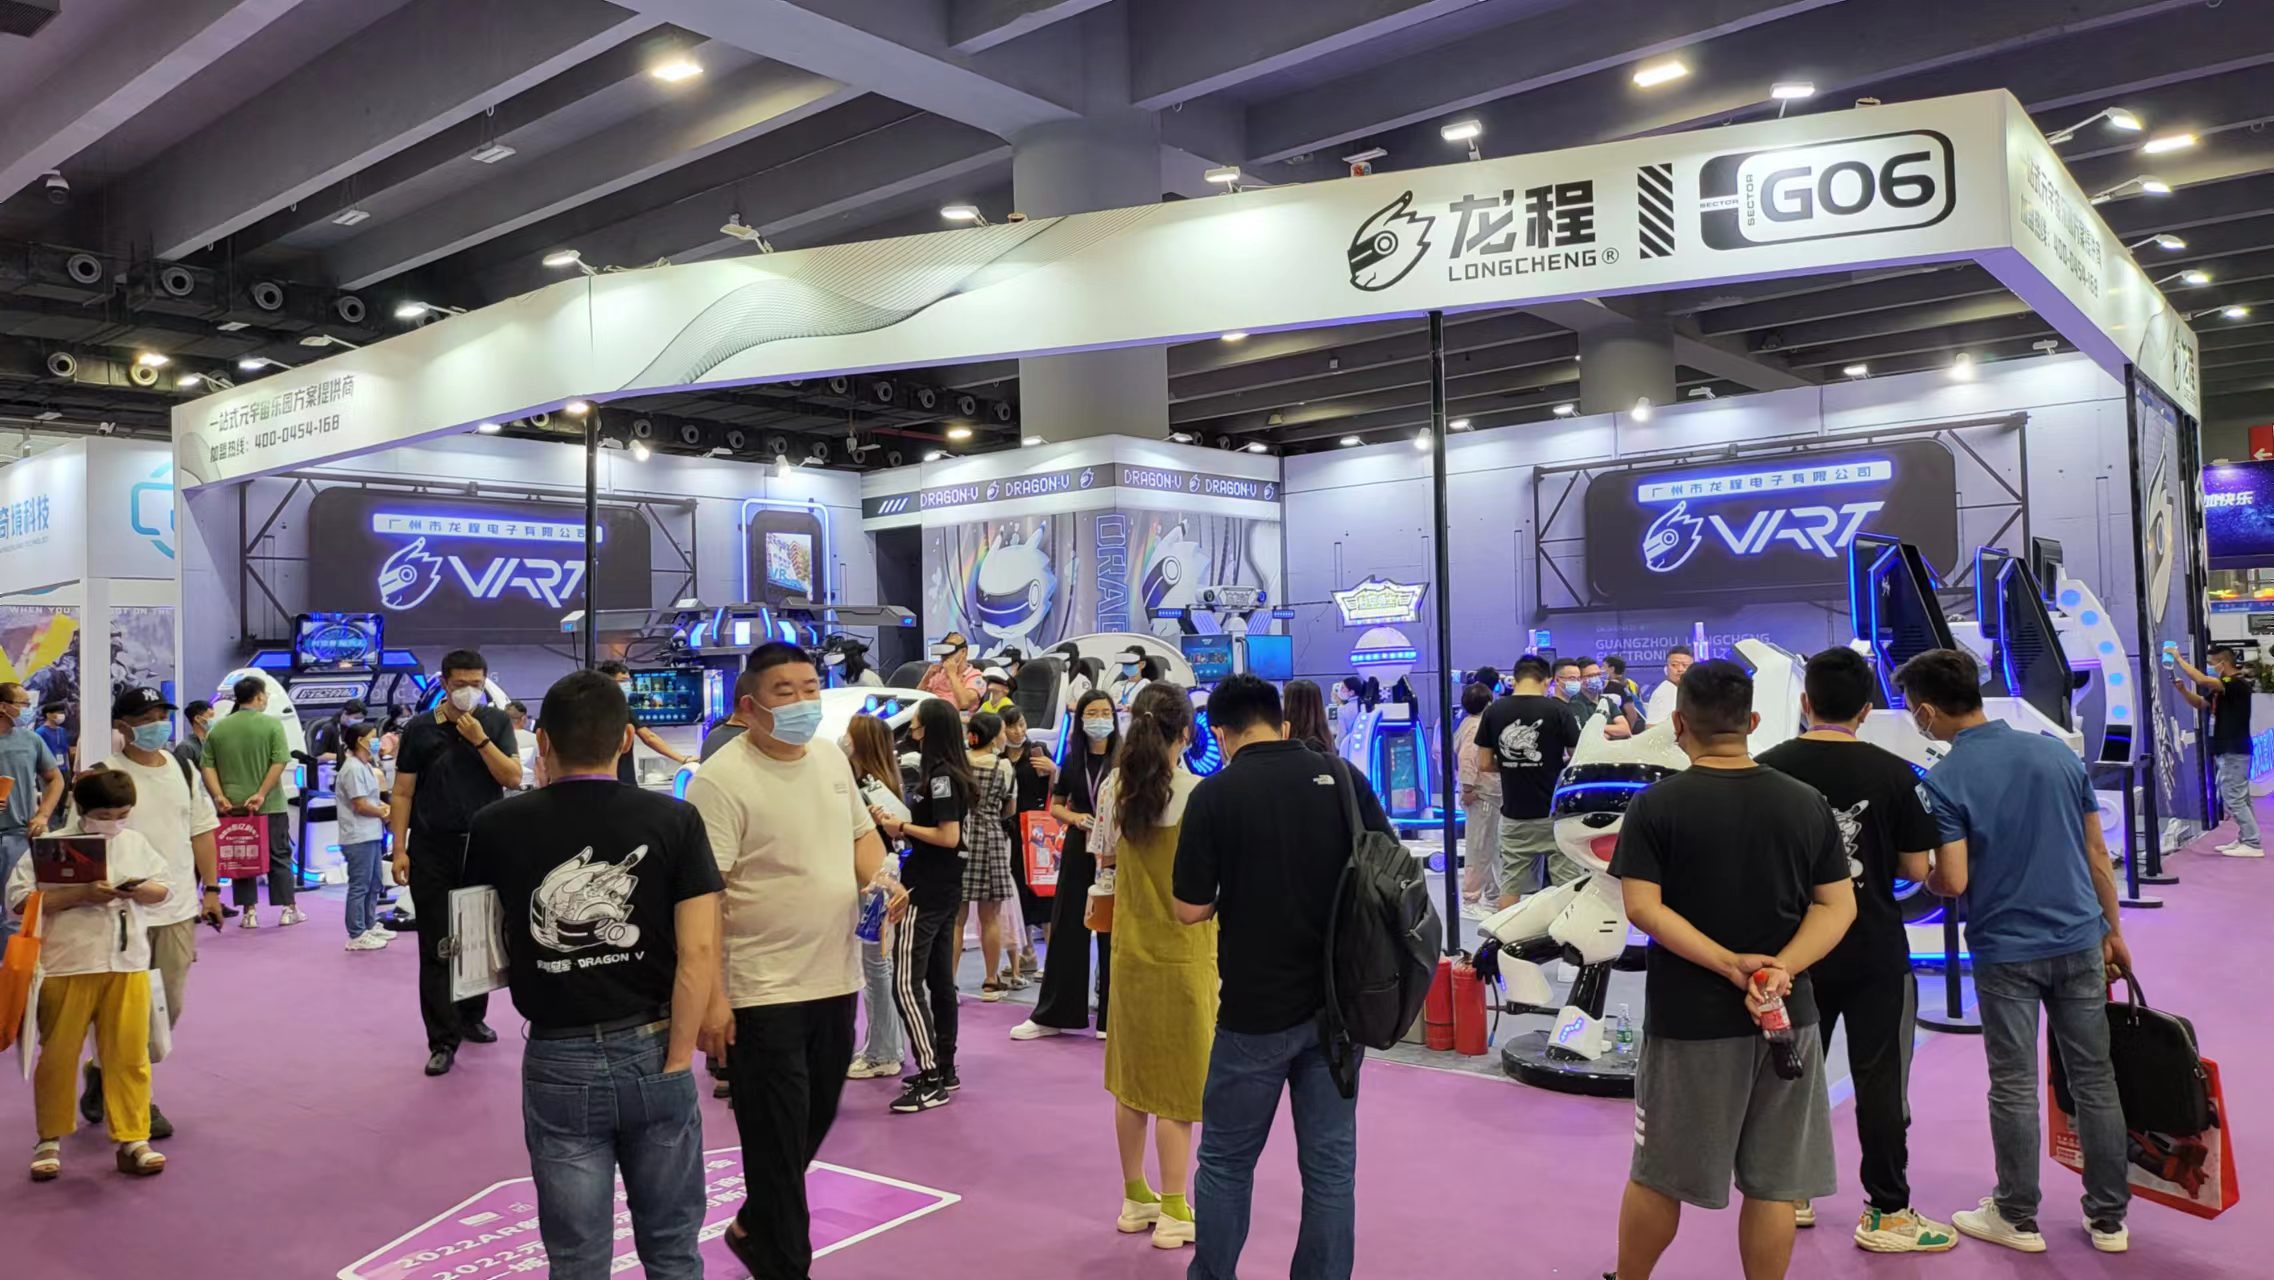 VART VR |Stand espositivo G06 di Guangzhou Metaverse davvero popolare